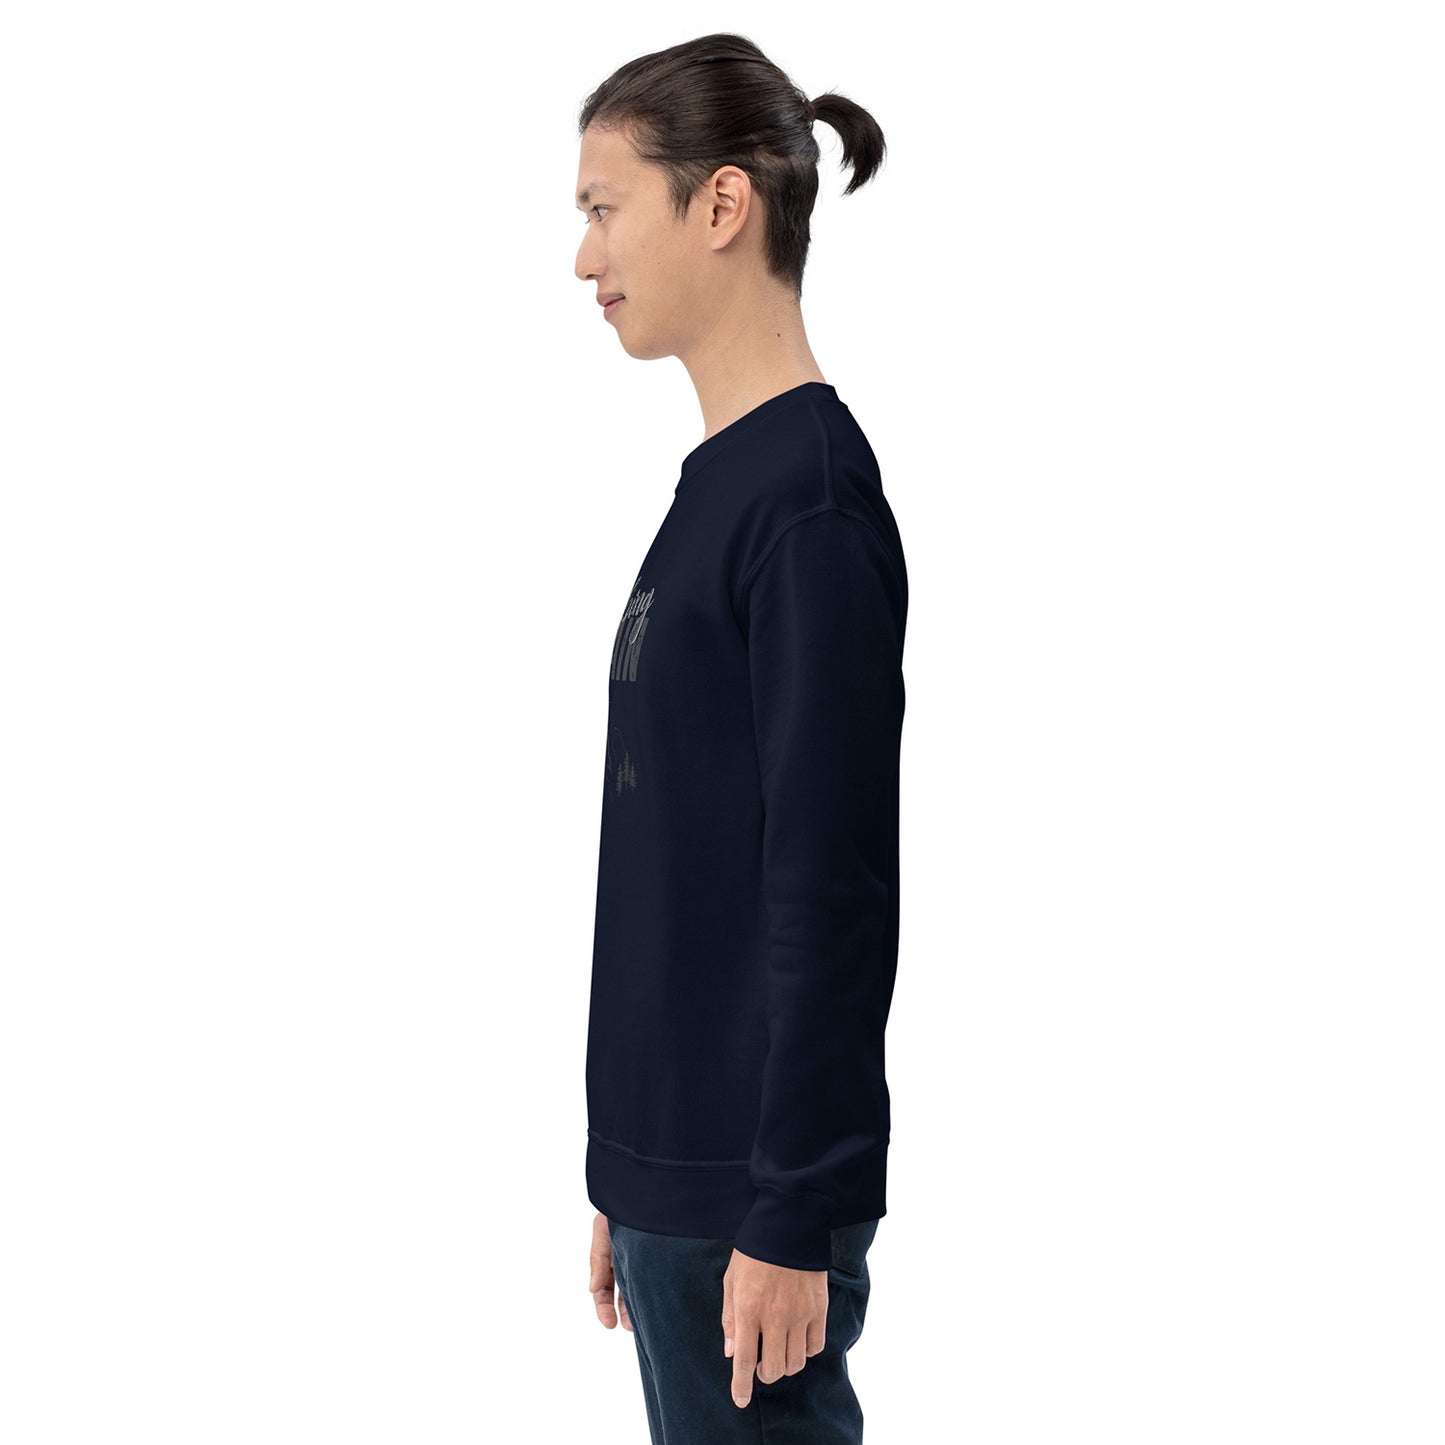 Classic Fit Sweatshirt with Air-Spun Softness